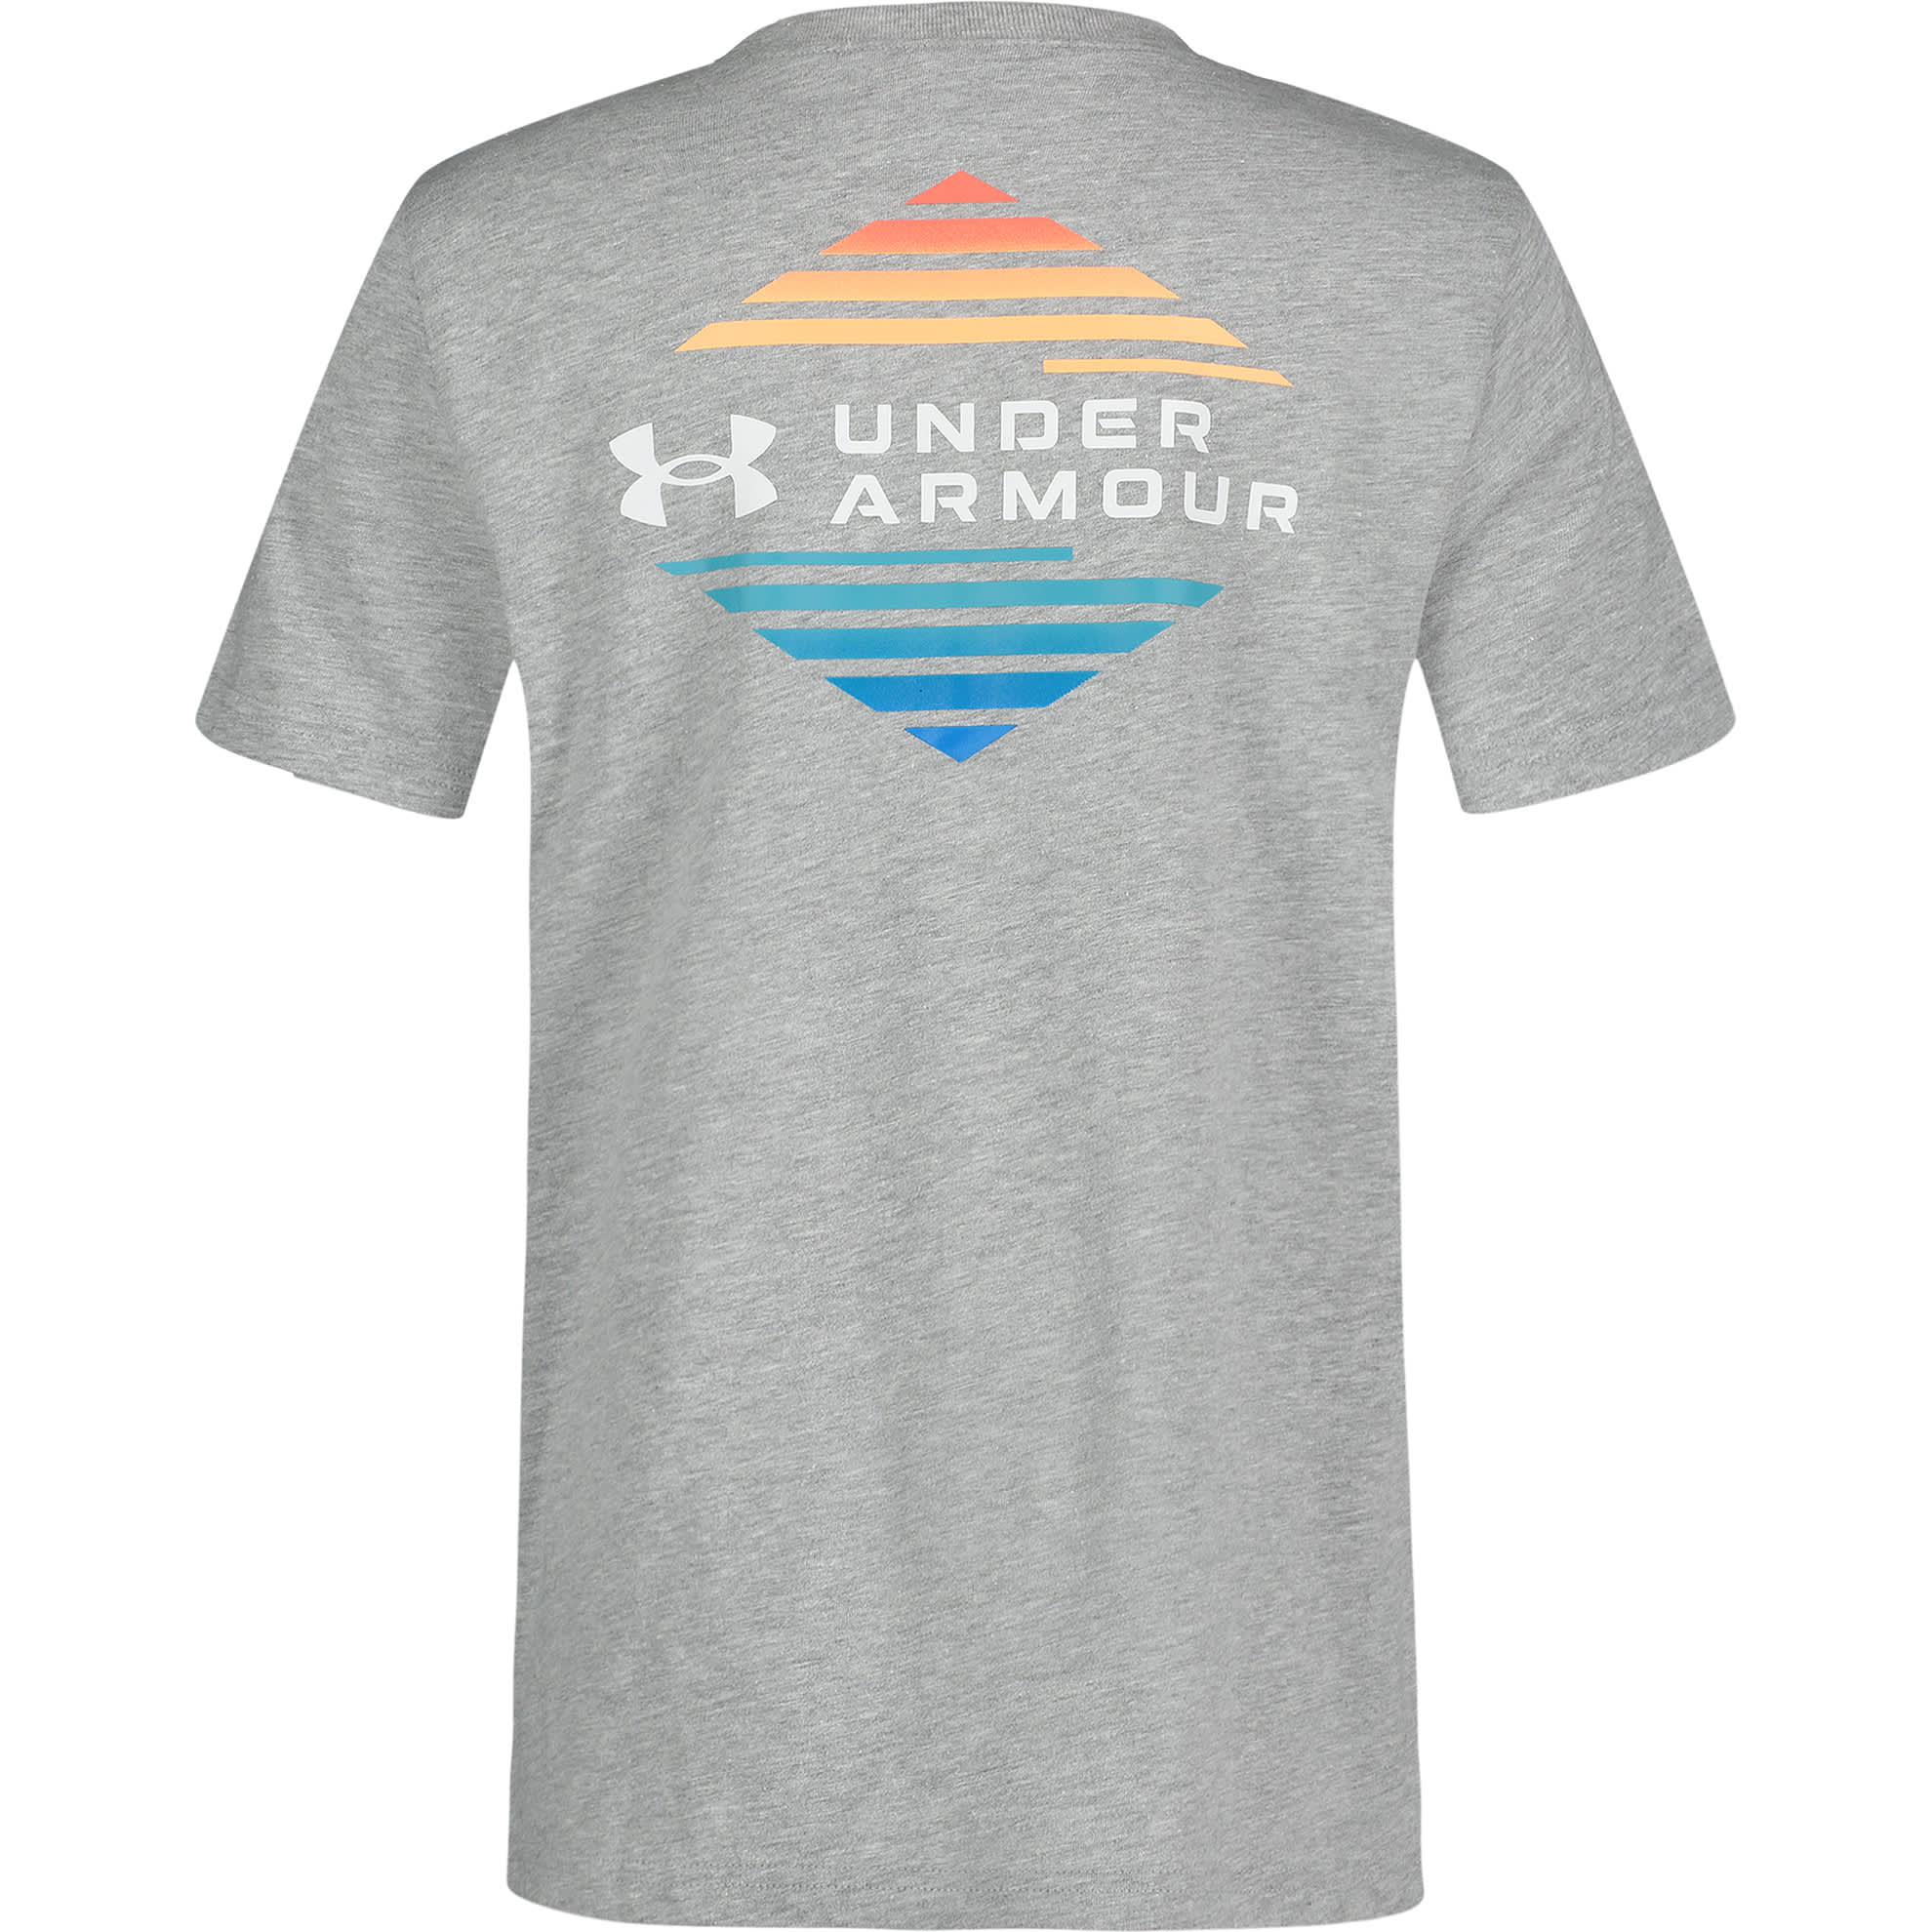 Under Armour® Boys’ Horizon Logo Short-Sleeve T-Shirt